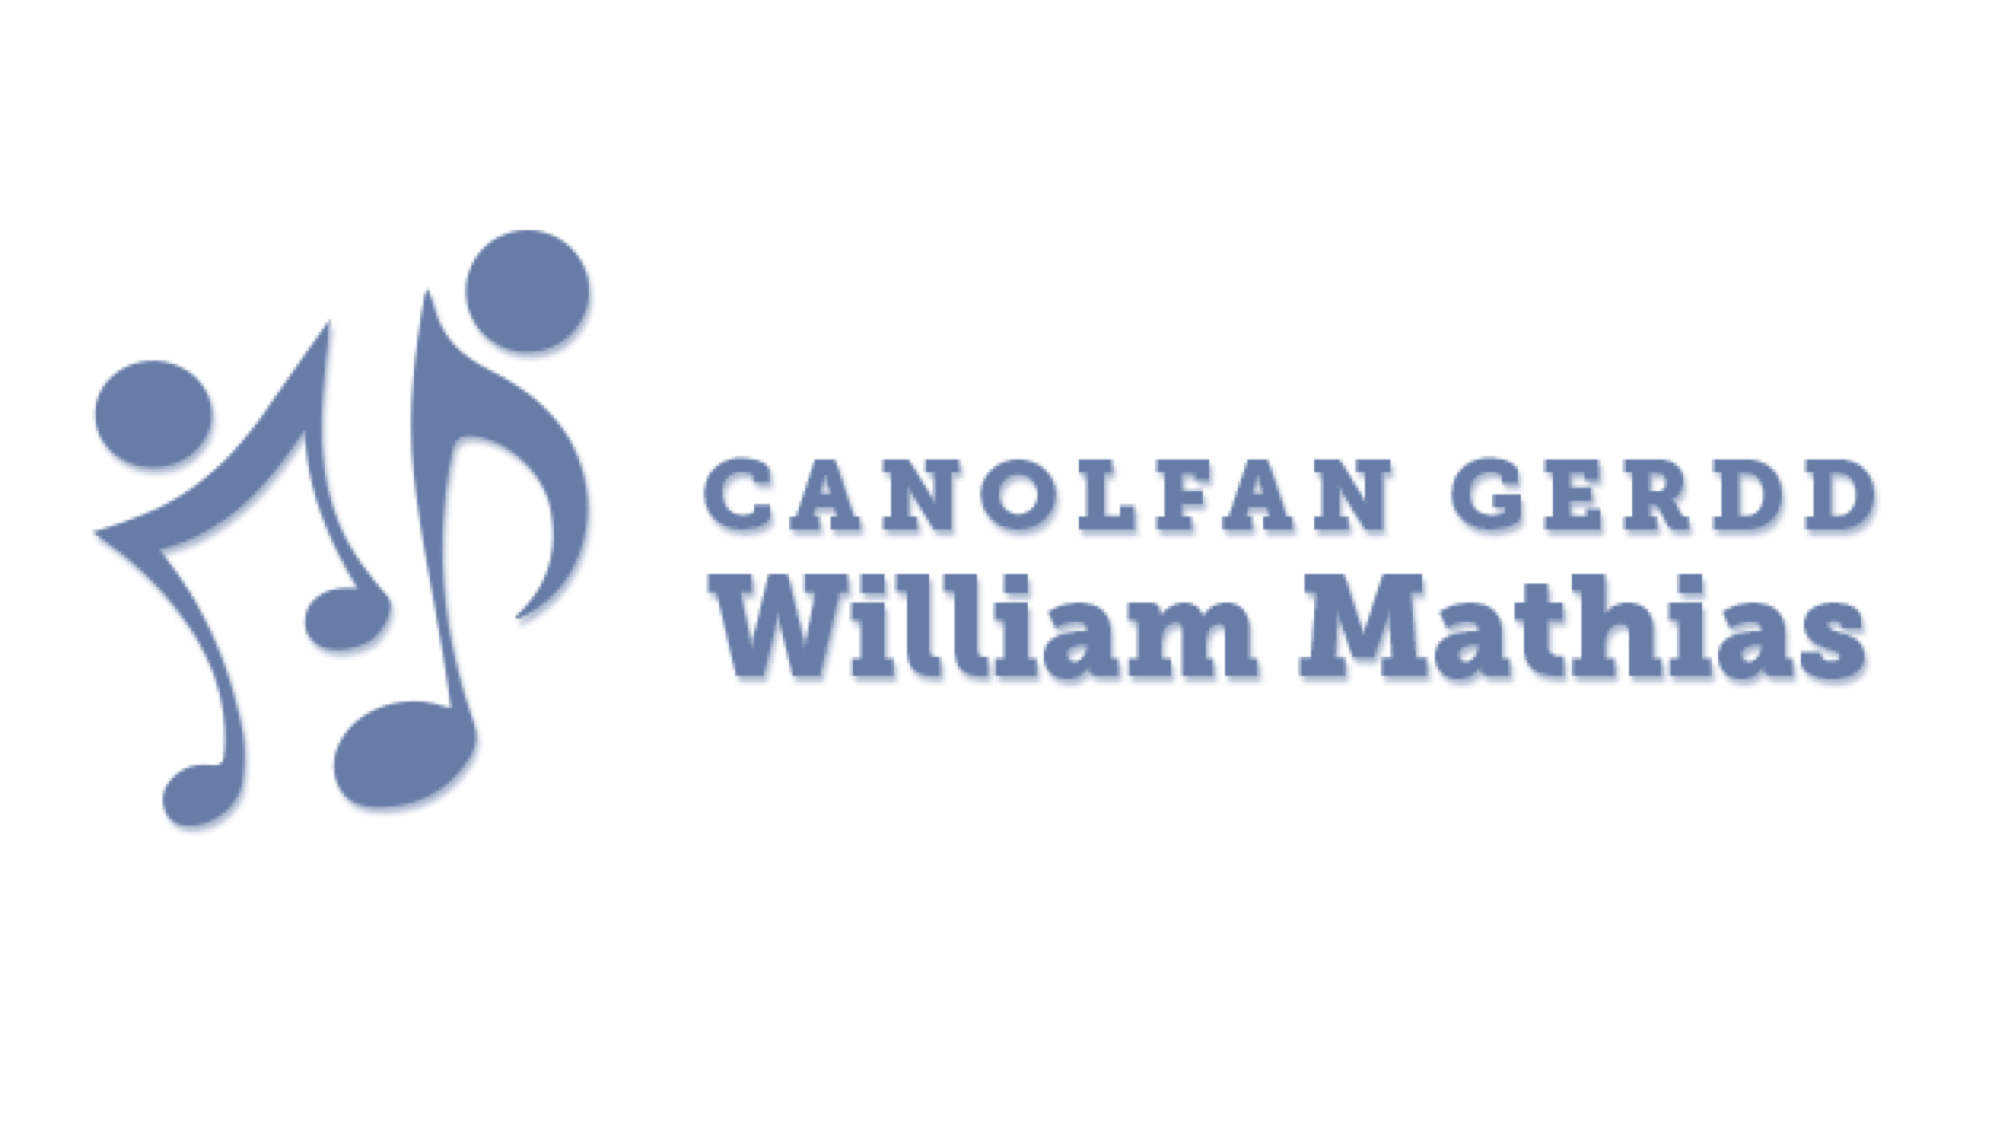 The logo of Canolfan Gerdd William Mathias